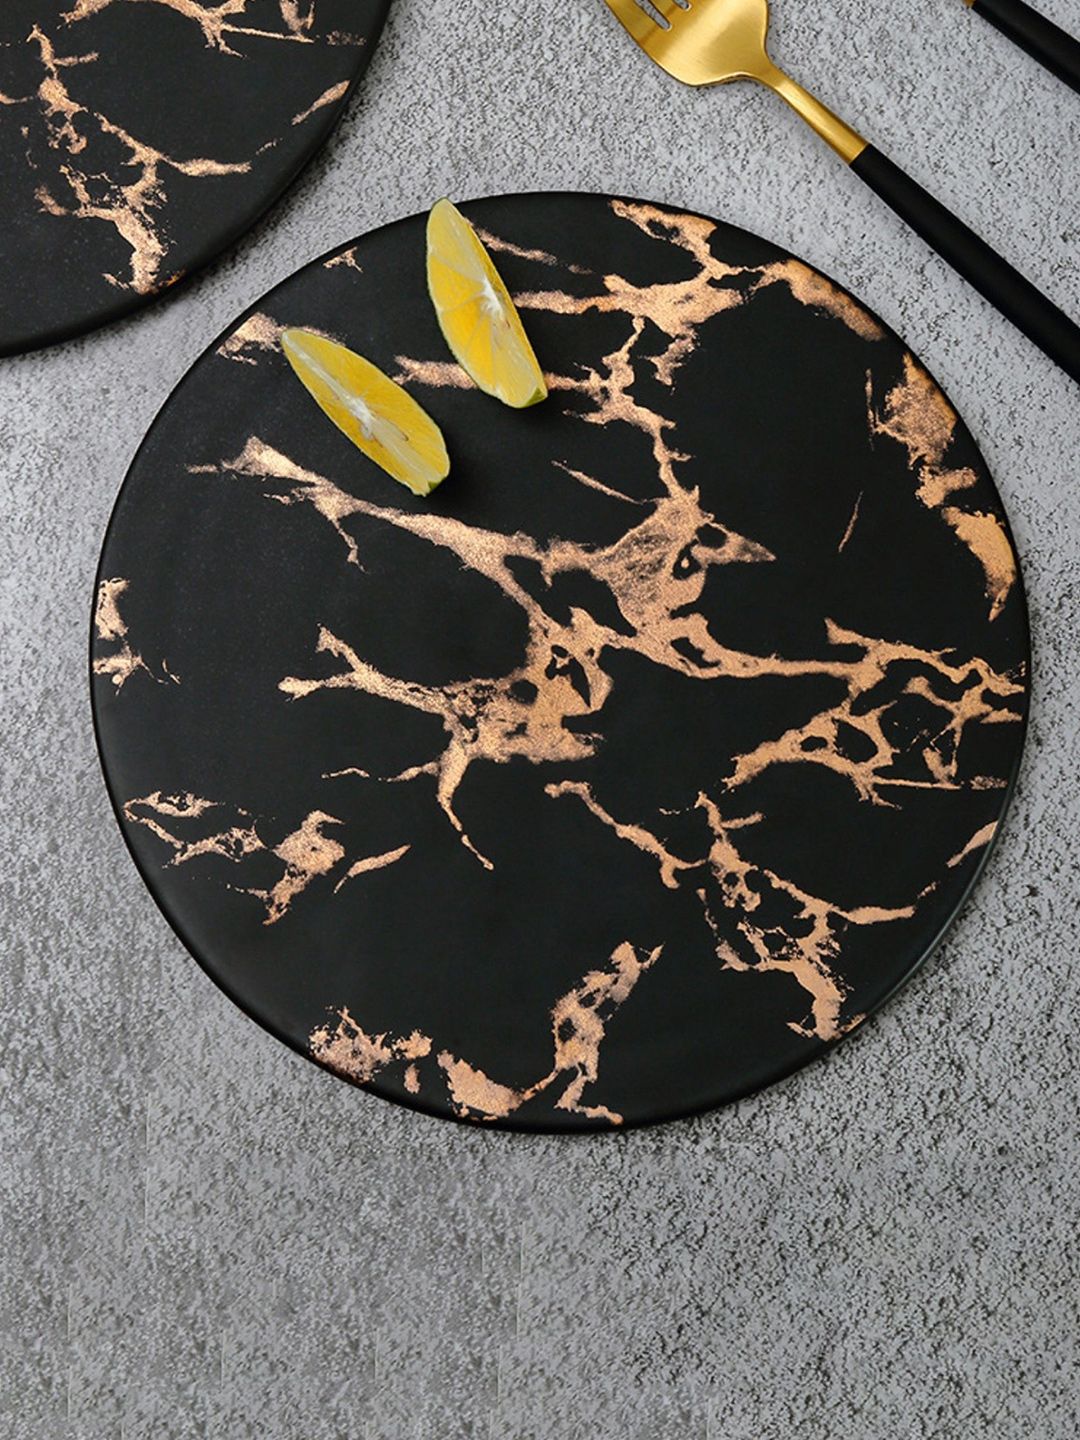 Nestasia Black & Gold Marble Printed Ceramic Round Serving Plate Price in India